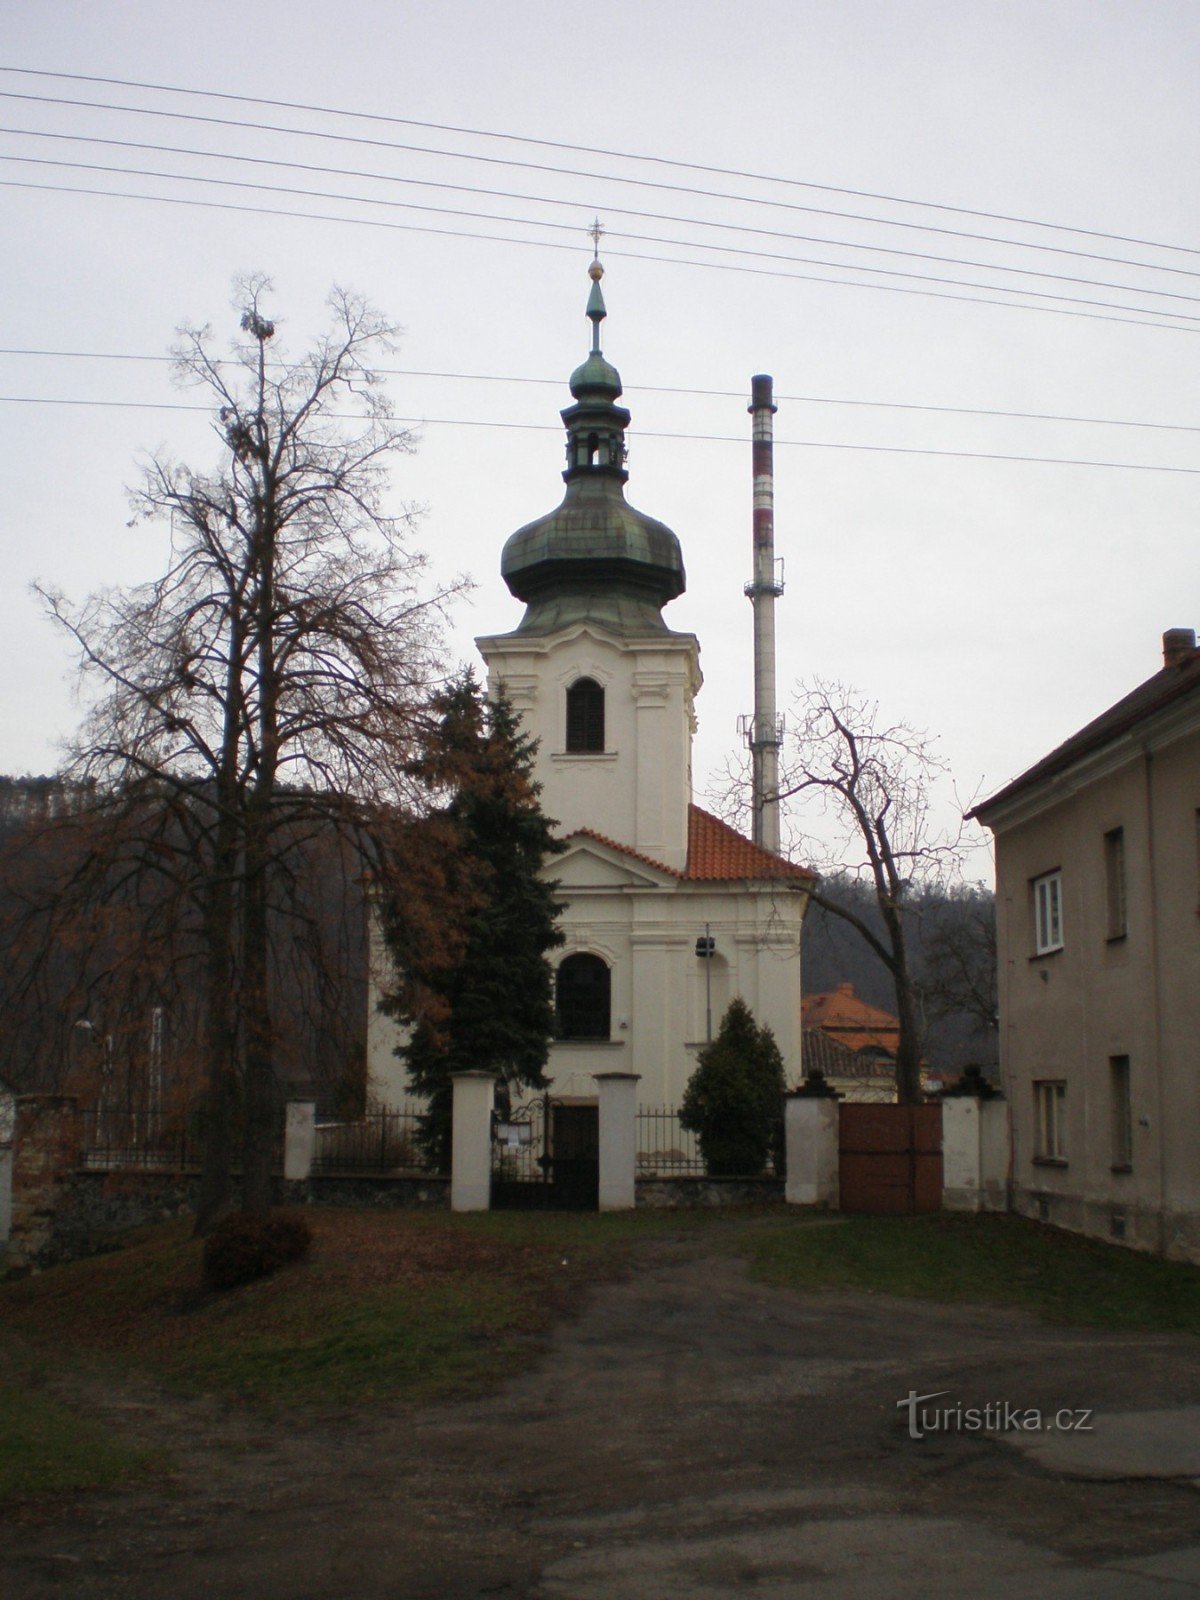 Libčice nad Vltavou - nhà thờ St. Bartholomew